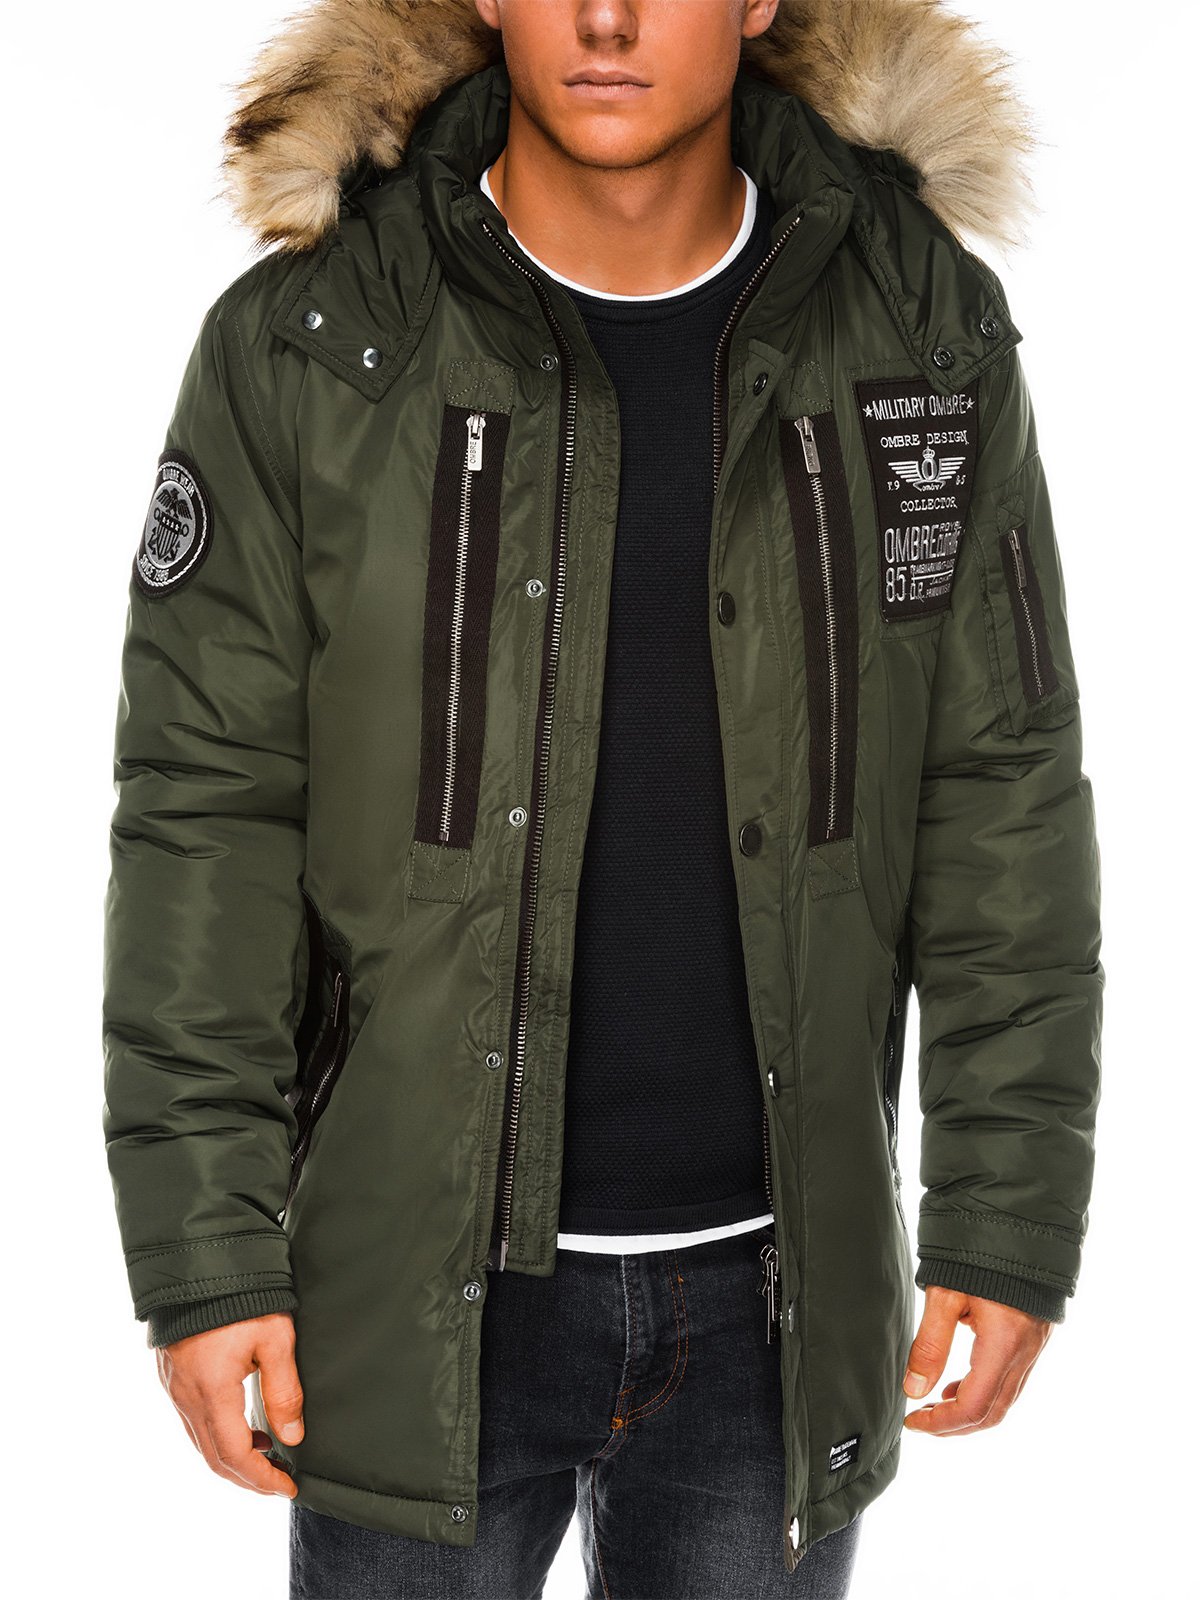 Men's winter parka jacket C360 - khaki | MODONE wholesale - Clothing ...